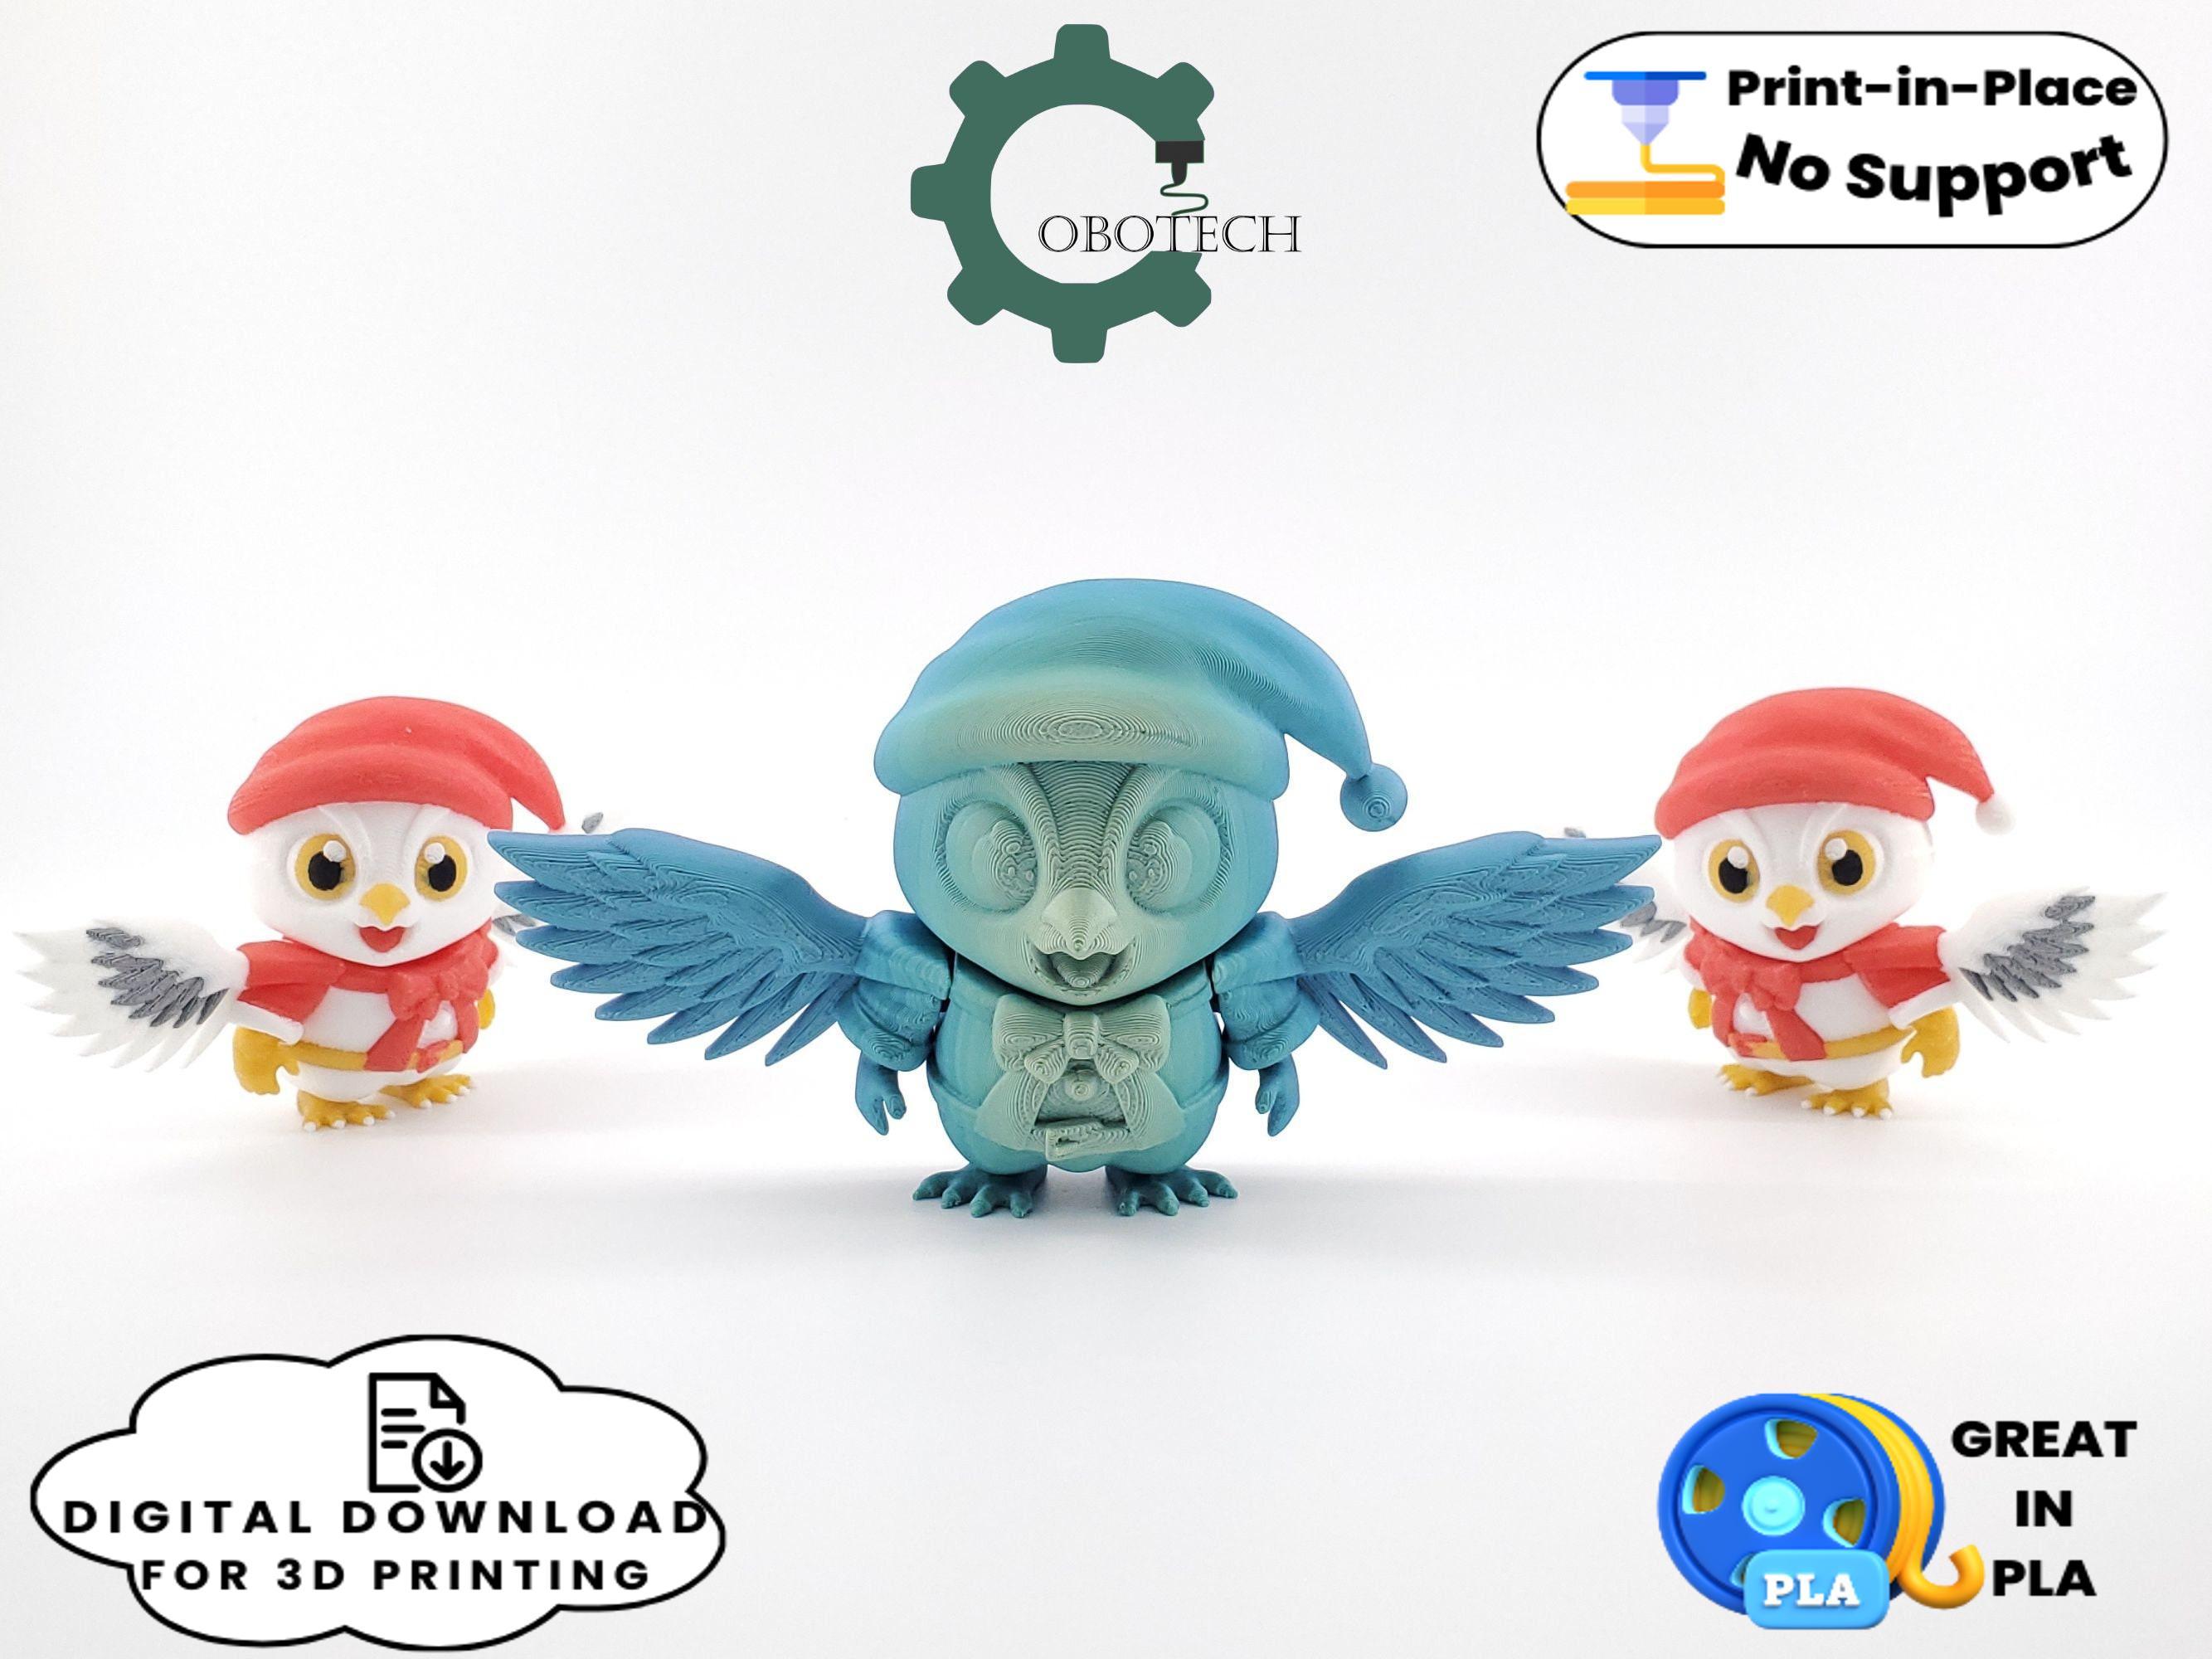 Cobotech Articulated Owl Santa 3d model